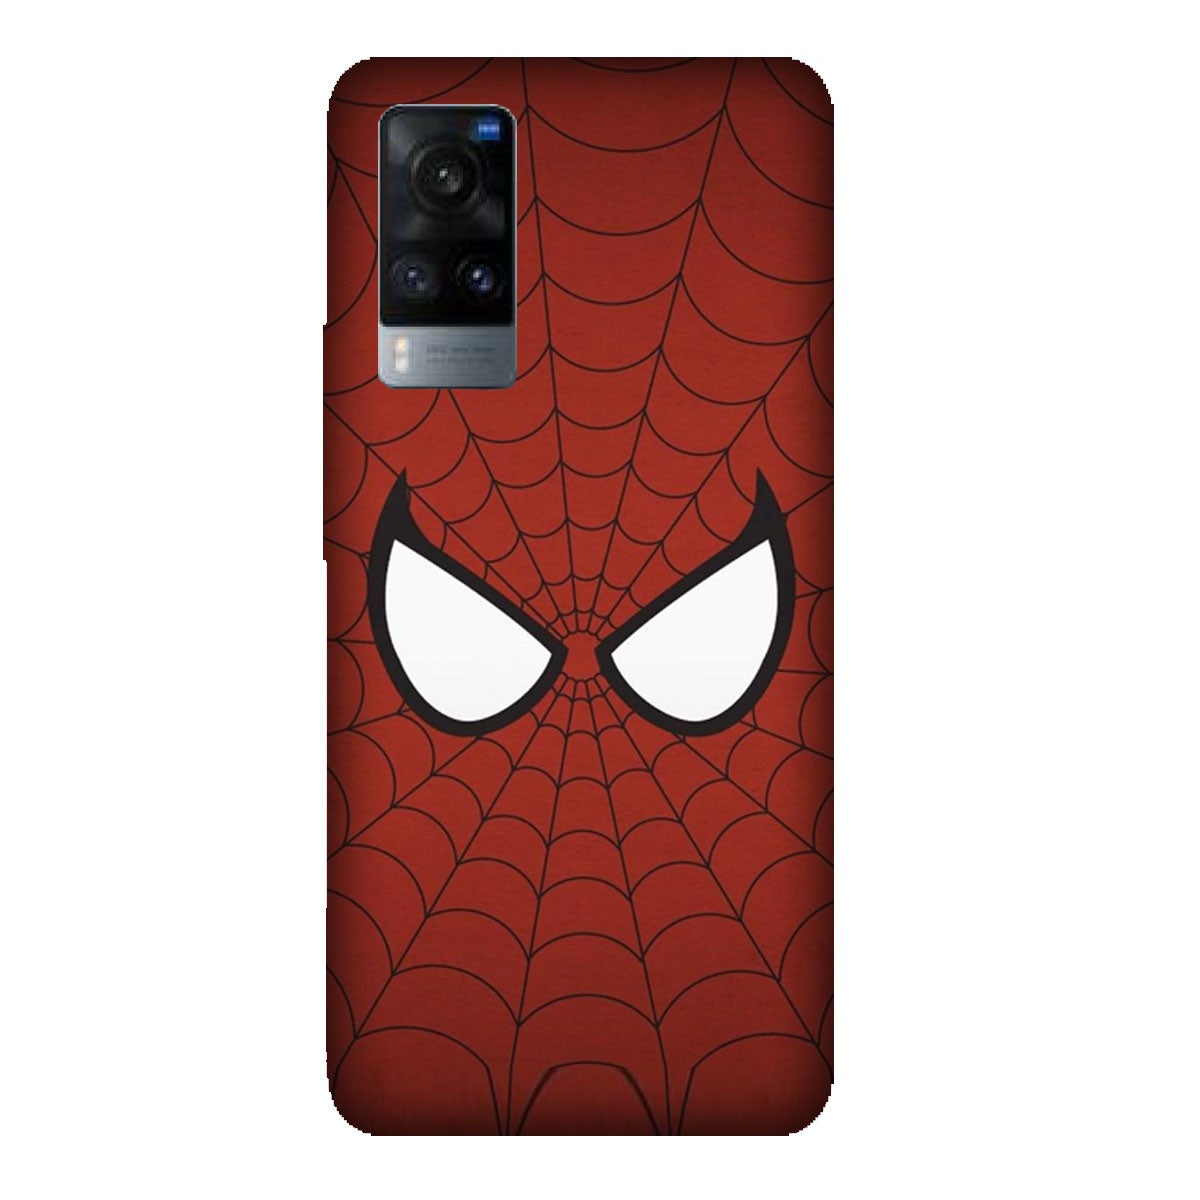 Spider Man - Eyes - Red - Mobile Phone Cover - Hard Case - Vivo